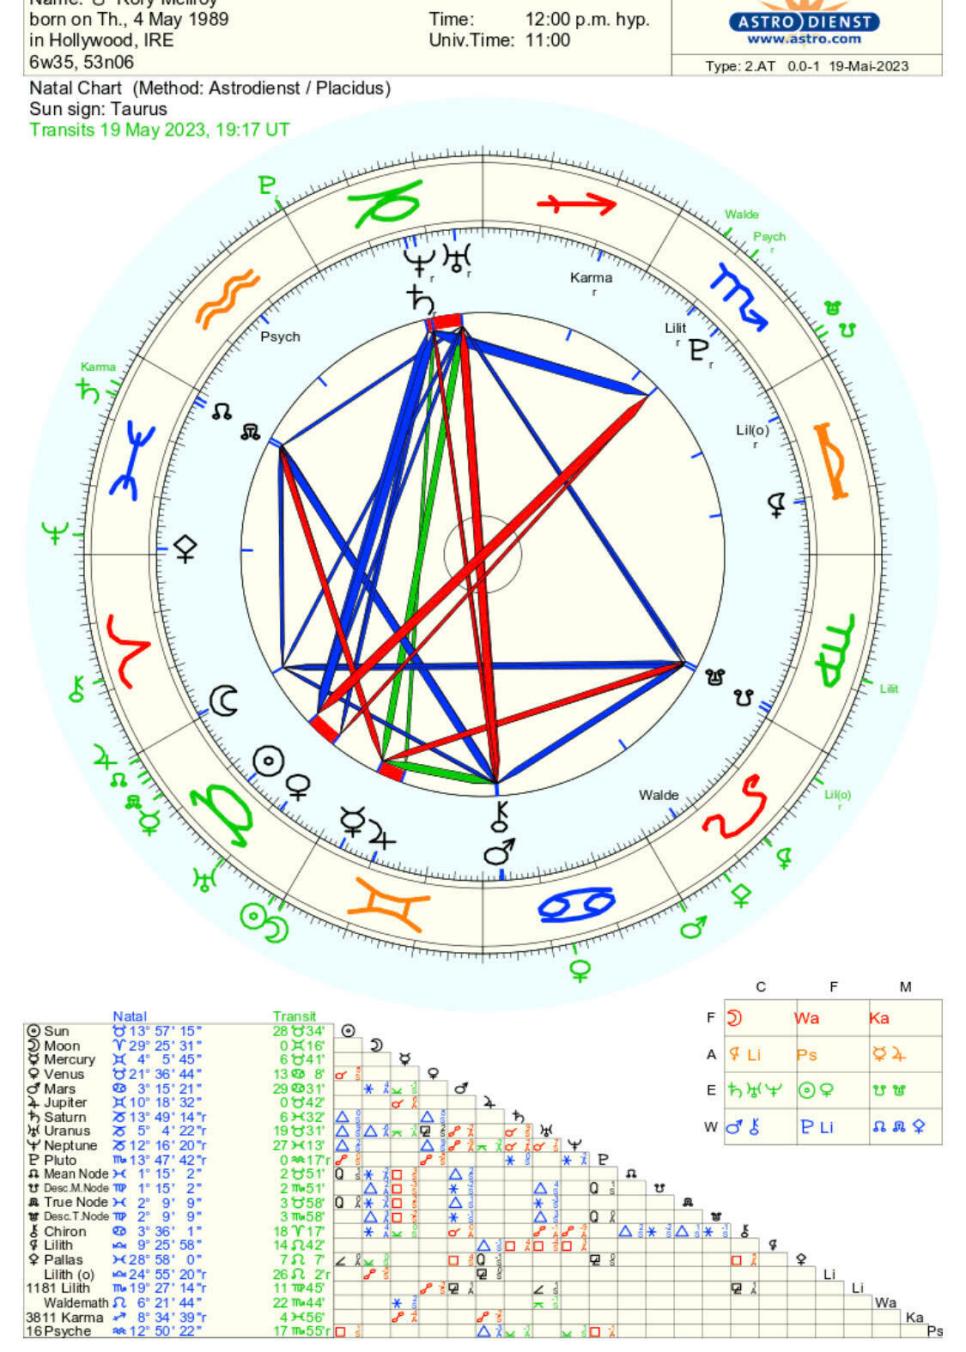 /content/dam/images/golfdigest/fullset/2023/5/Rory-Mcllroy-astrological-chart.jpg